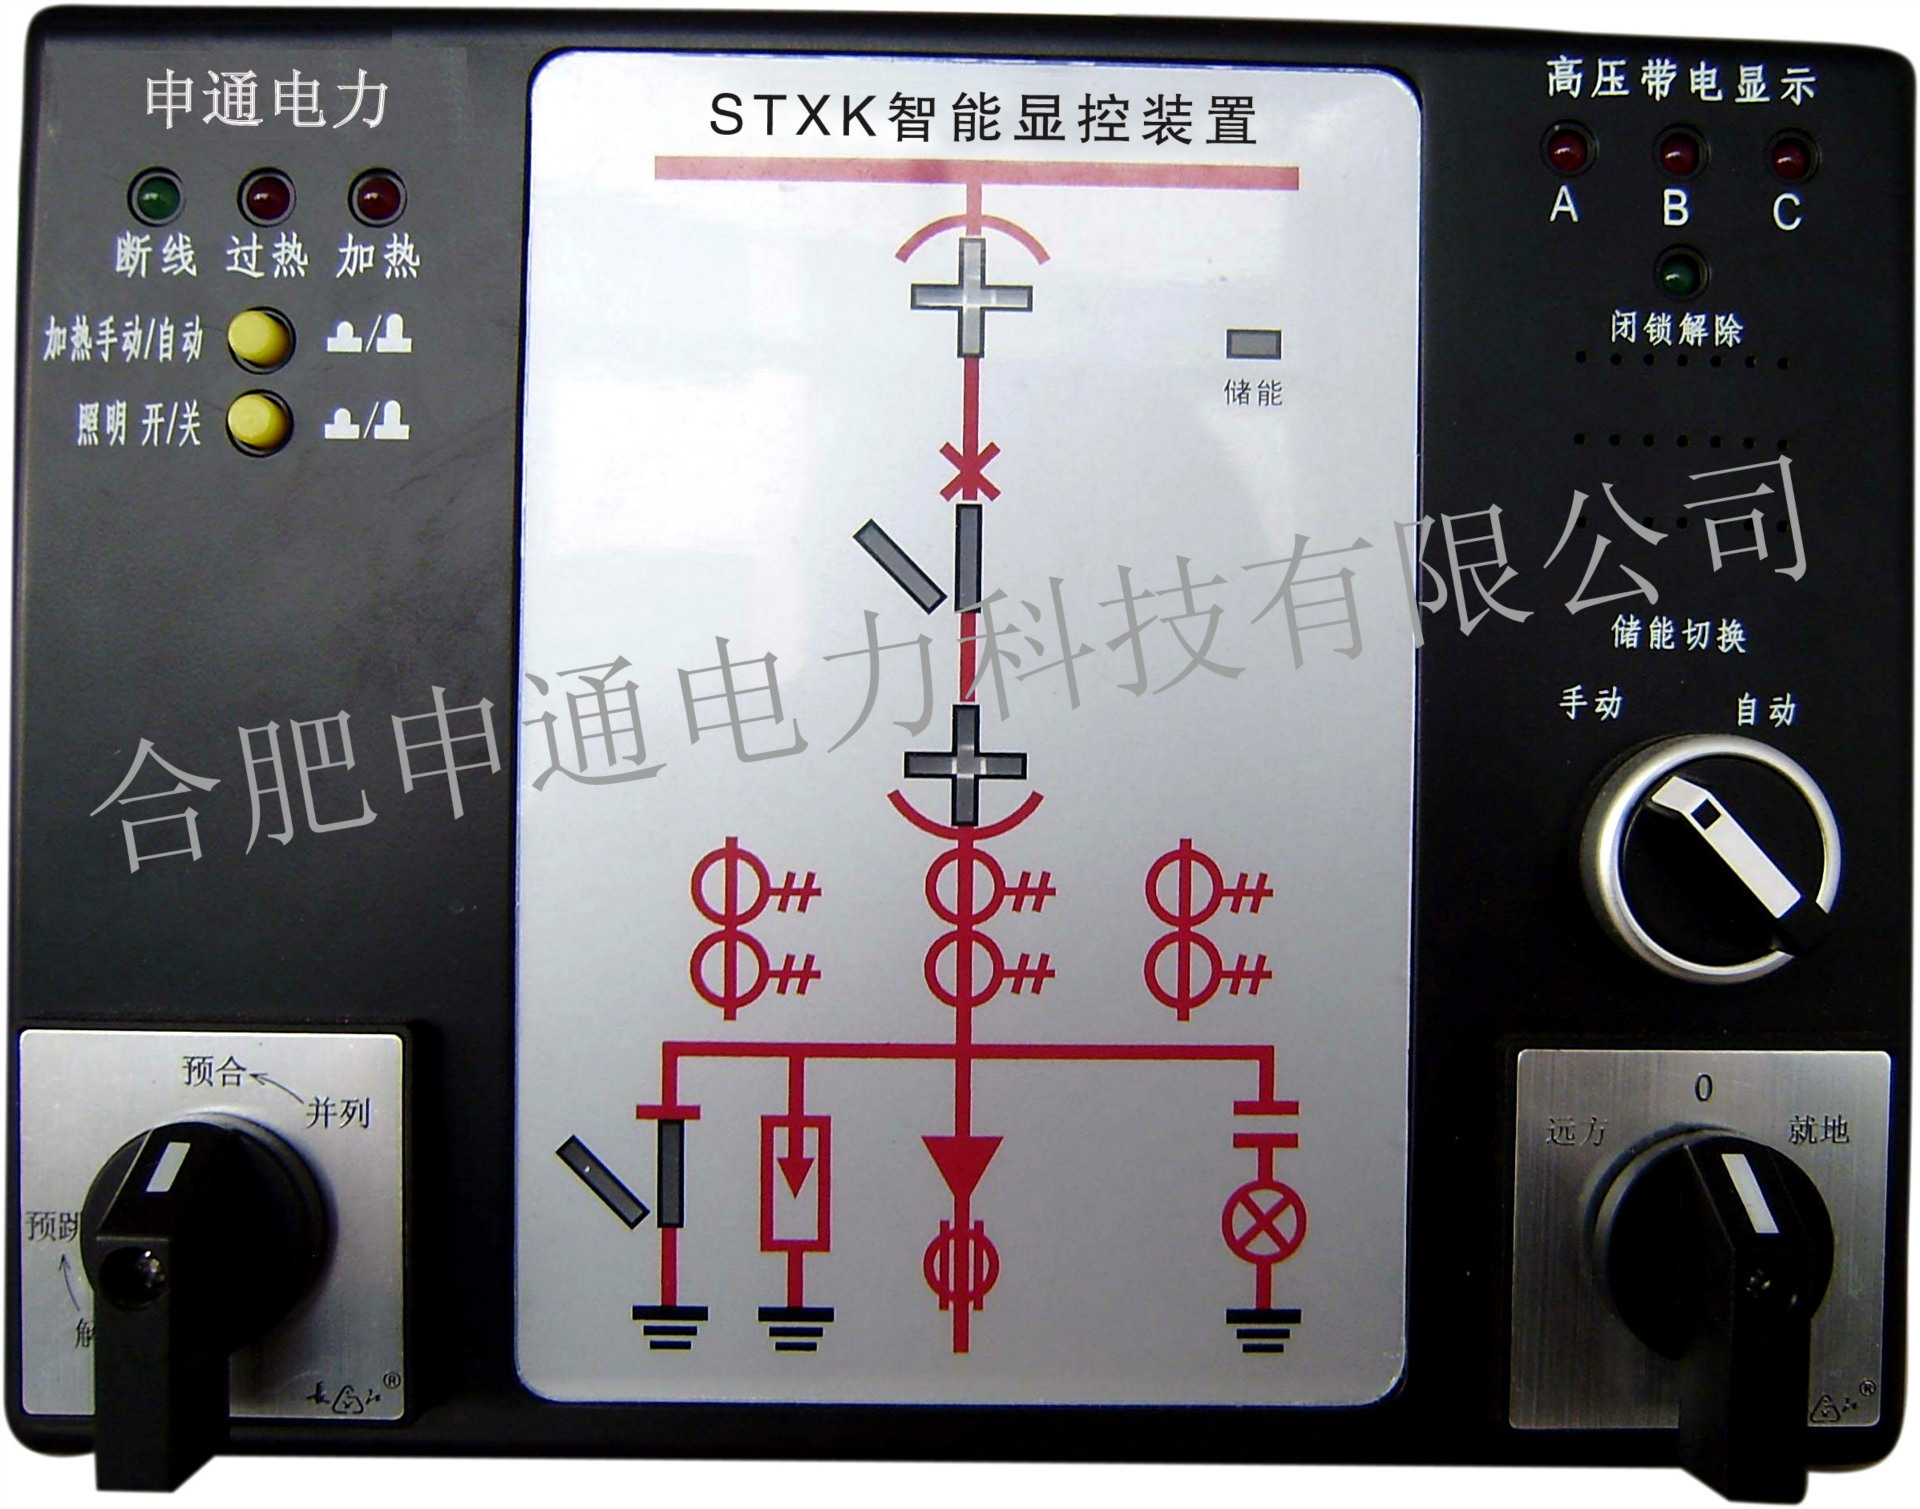 STXK智能顯控裝置